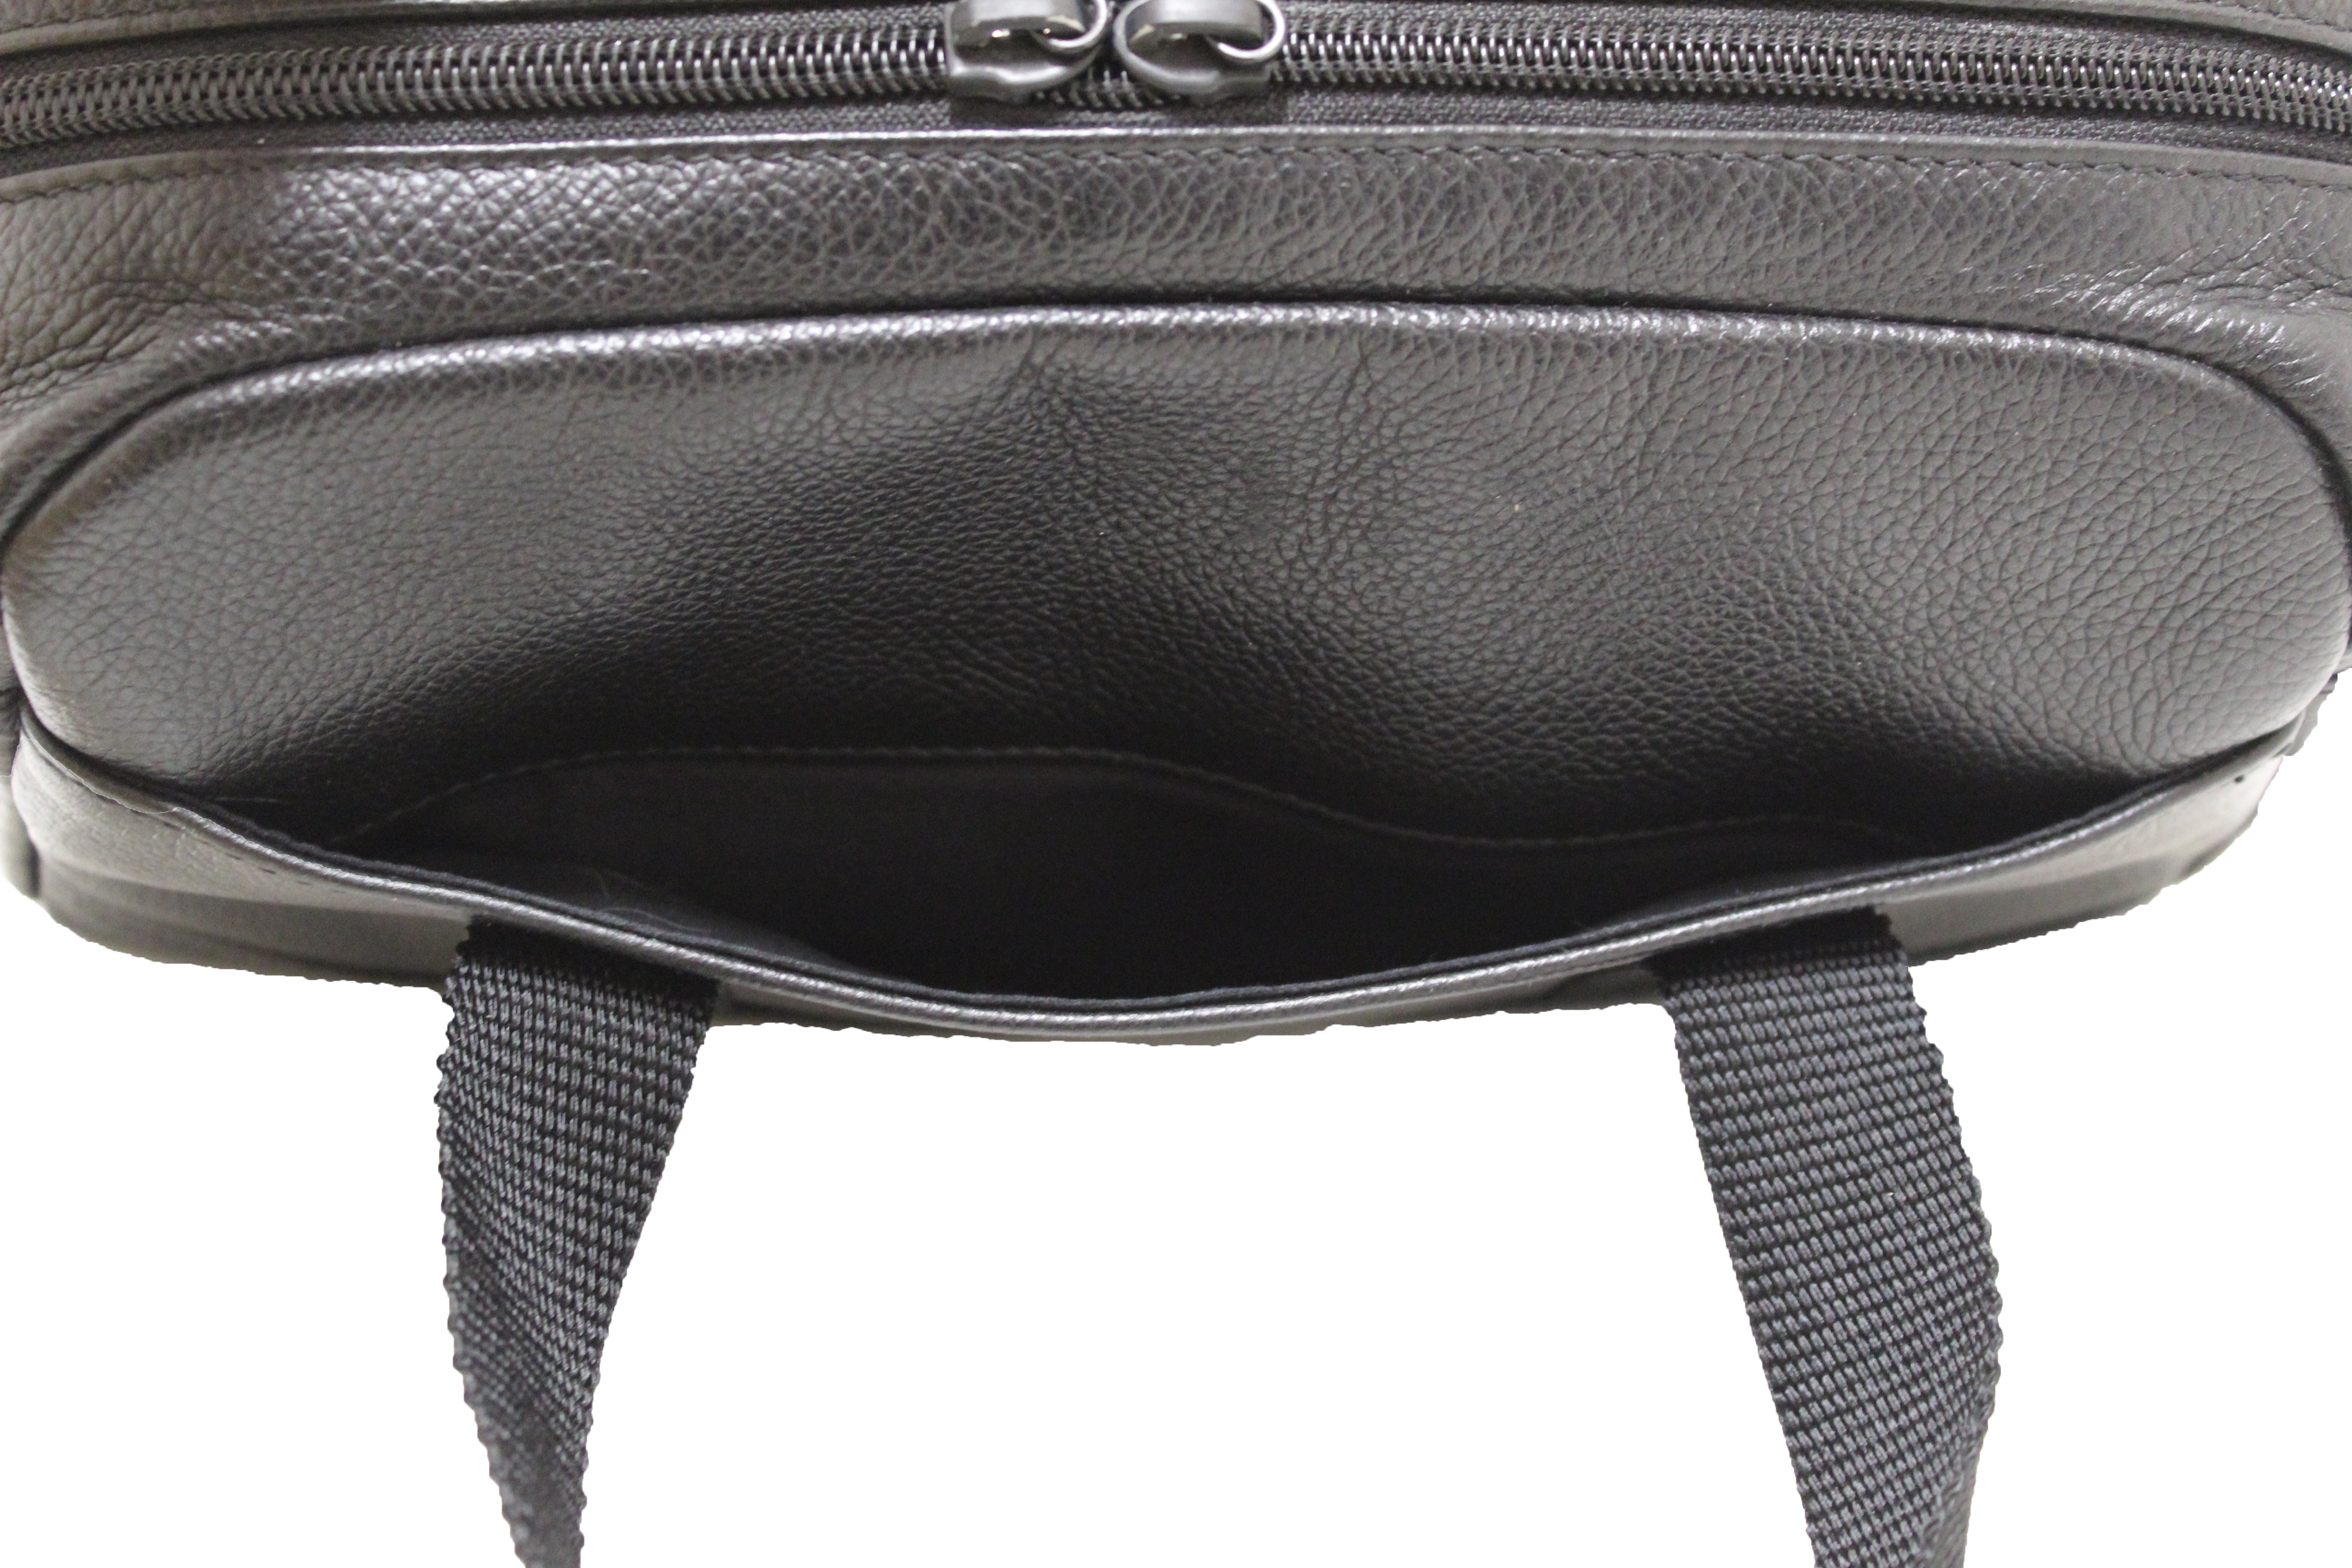 Authentic Balenciaga Black Grained Calfskin Leather Explorer Small Duffle Bag